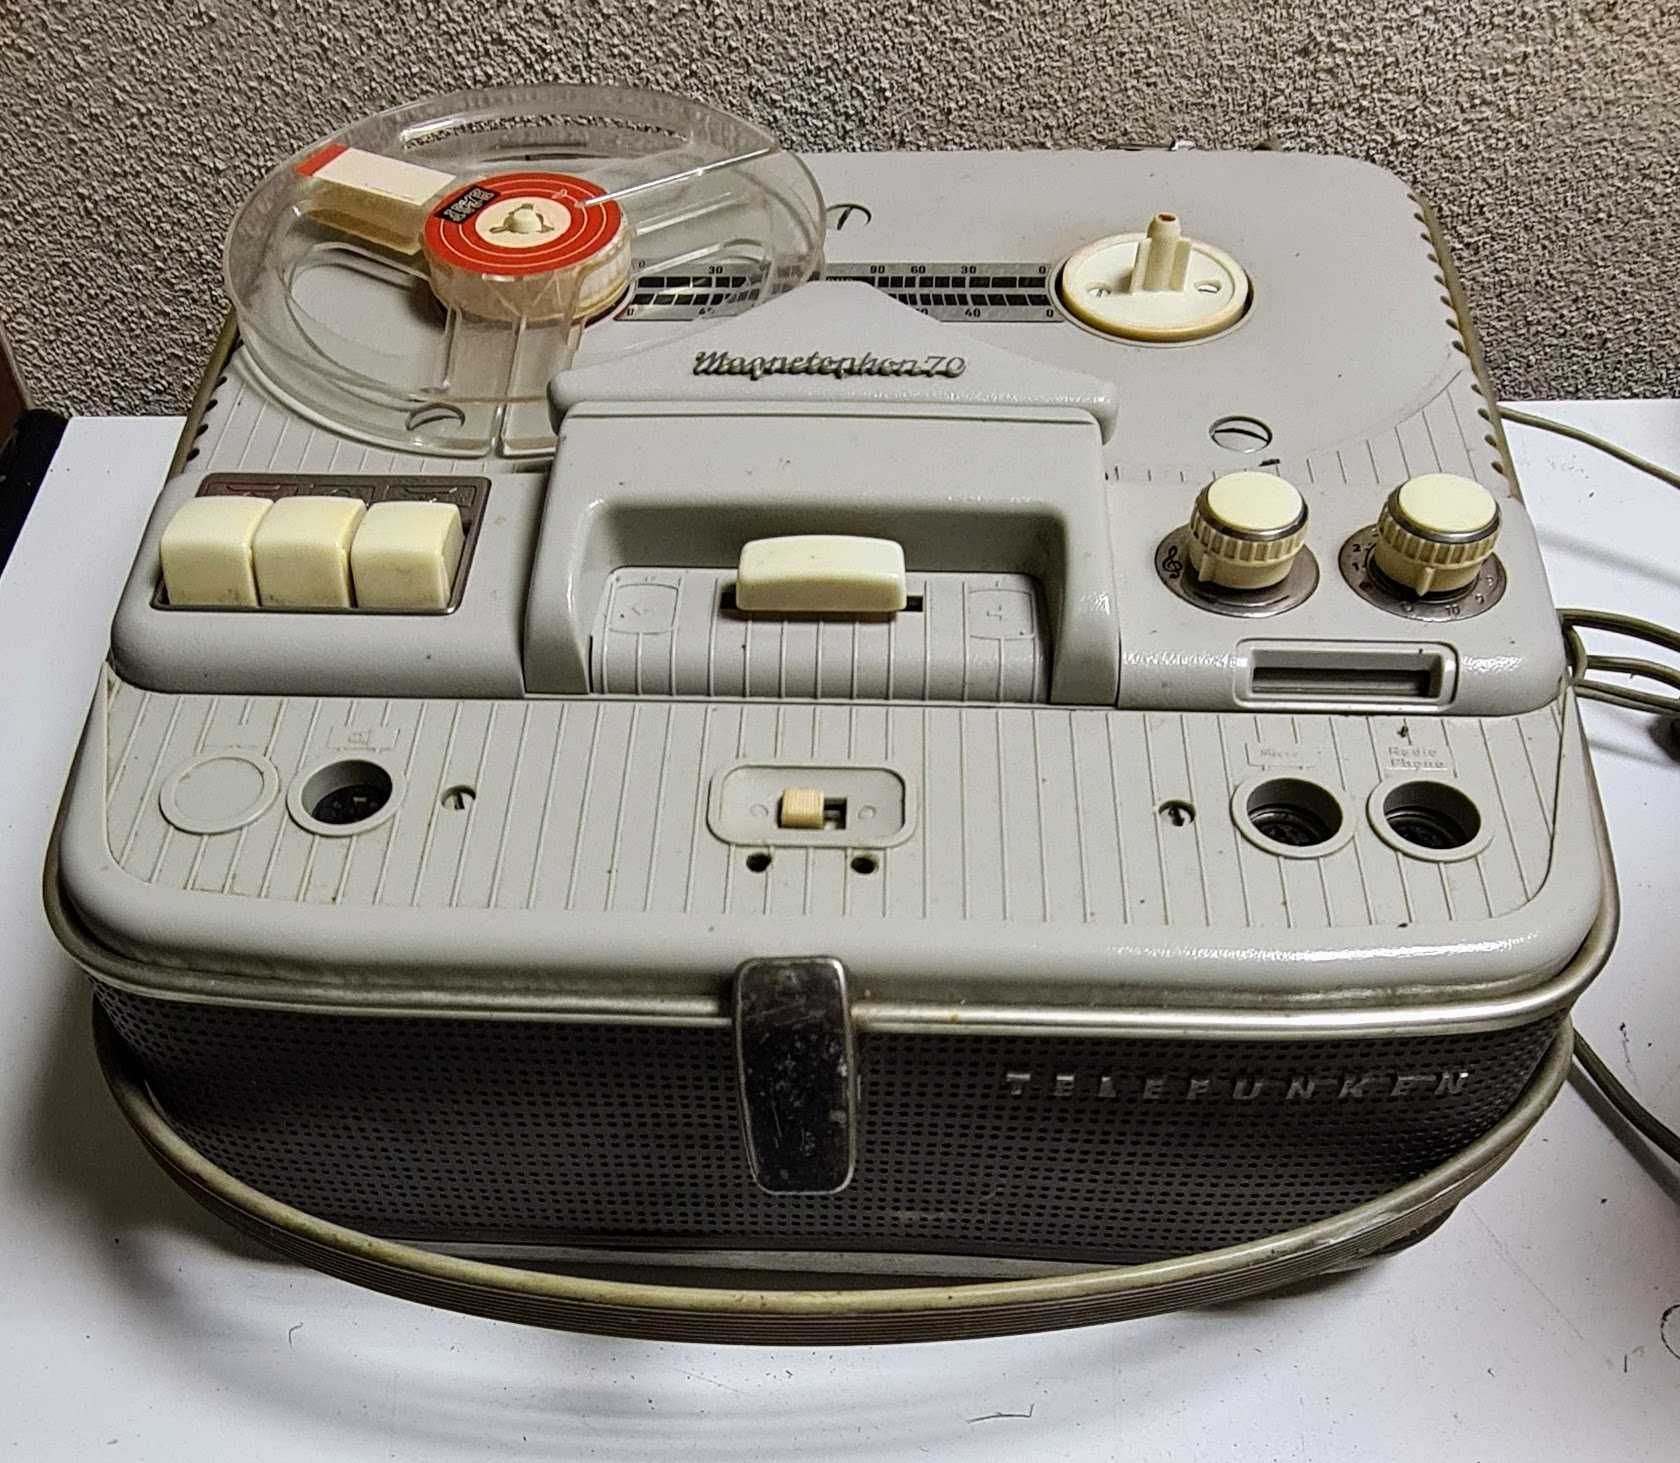 gravador telefunken, Magnetophon 70